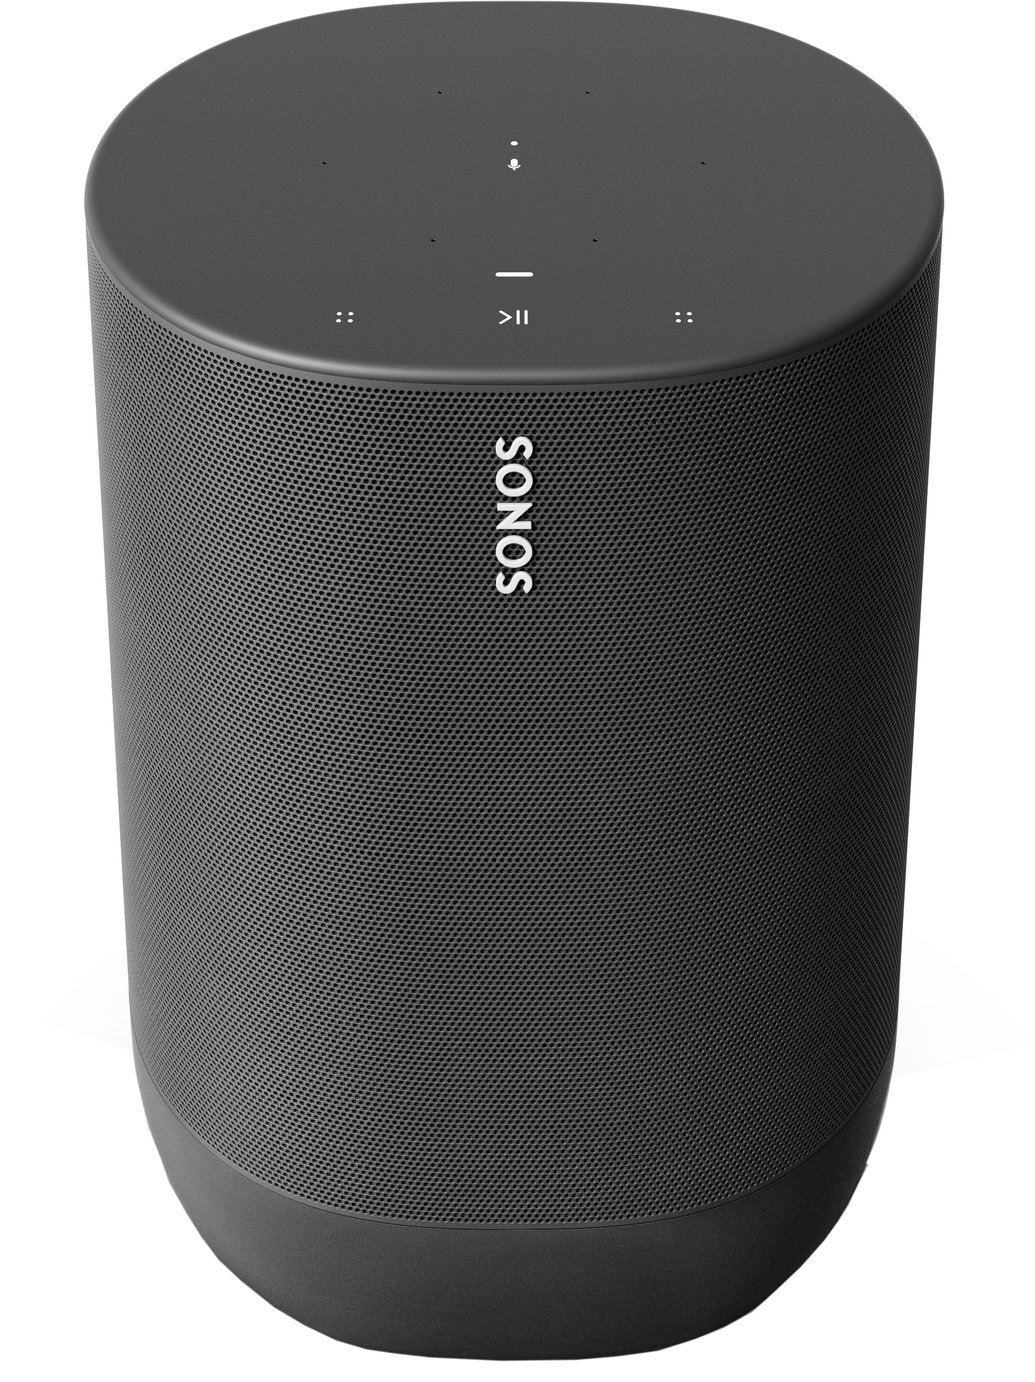 Sonos Move Wireless Smart Speaker - Black